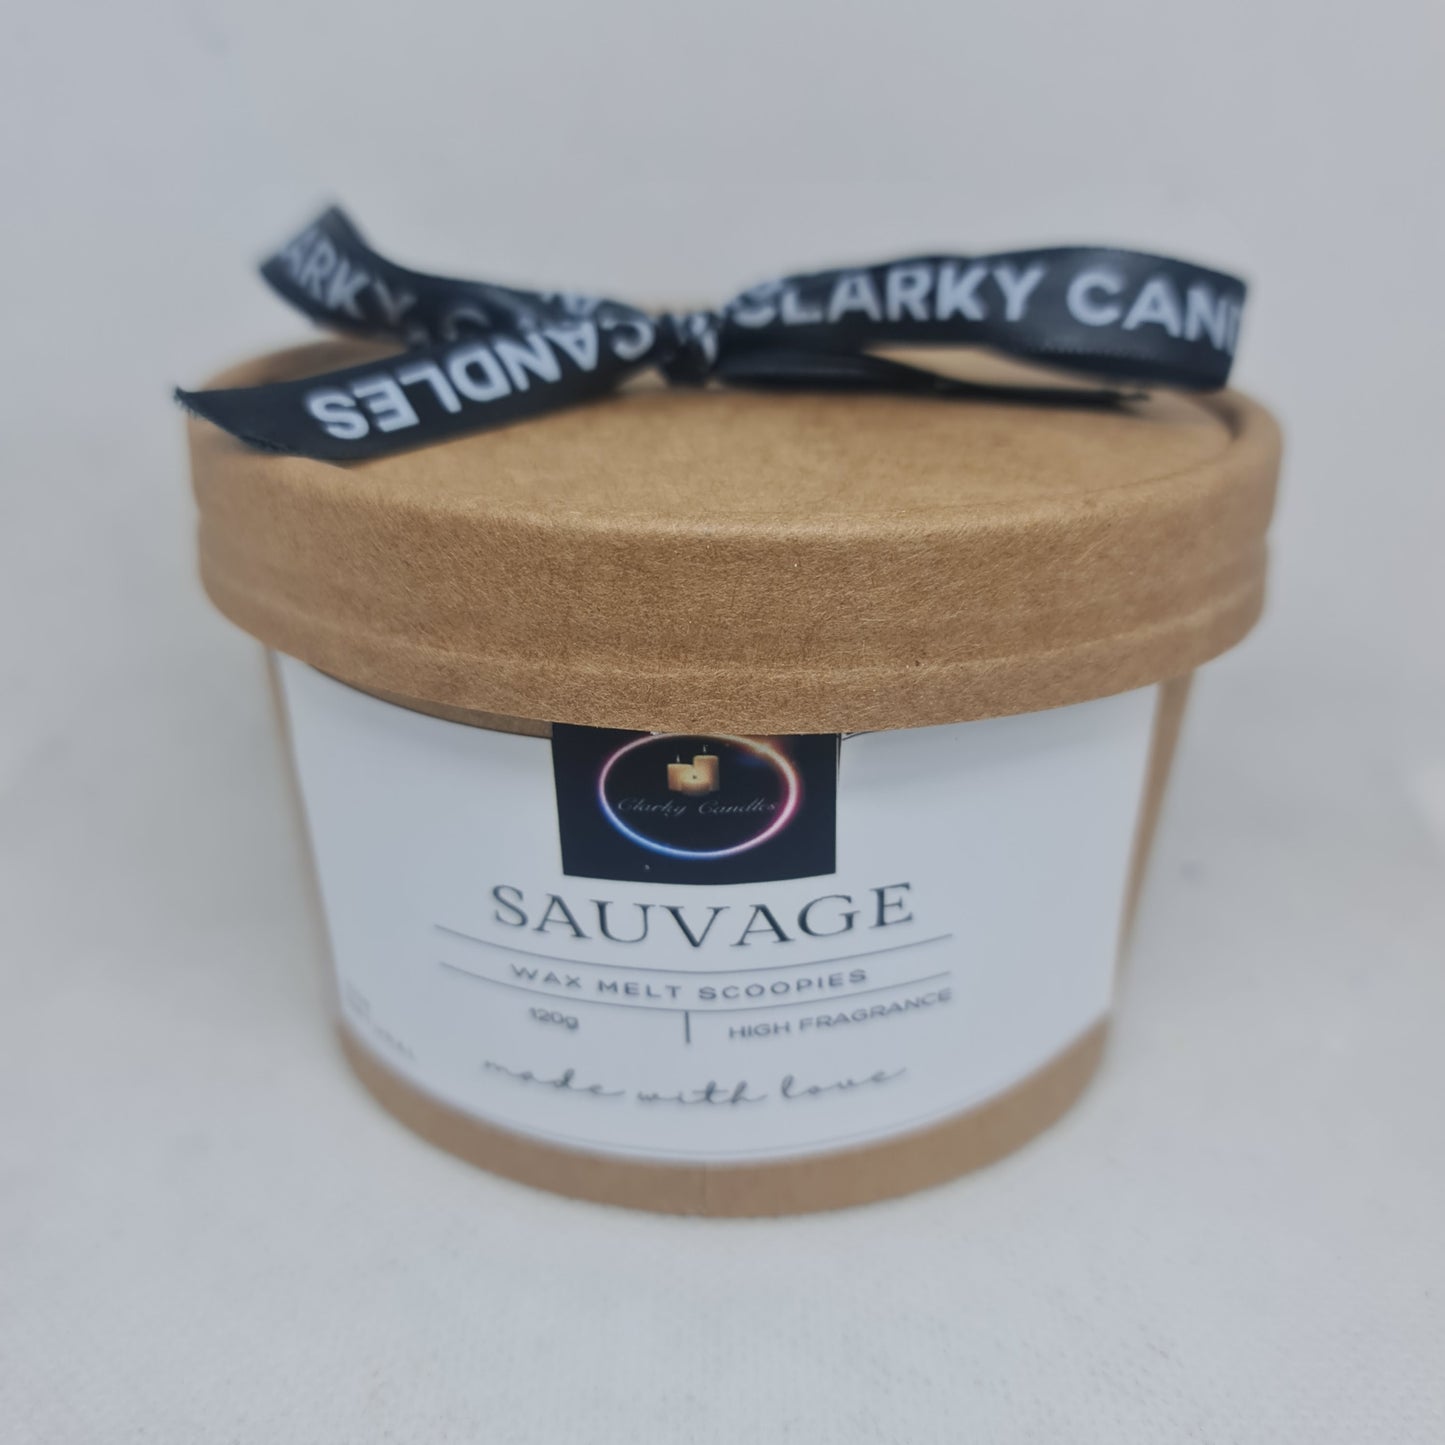 Sauvage - Wax Melt Scoopies - 120g